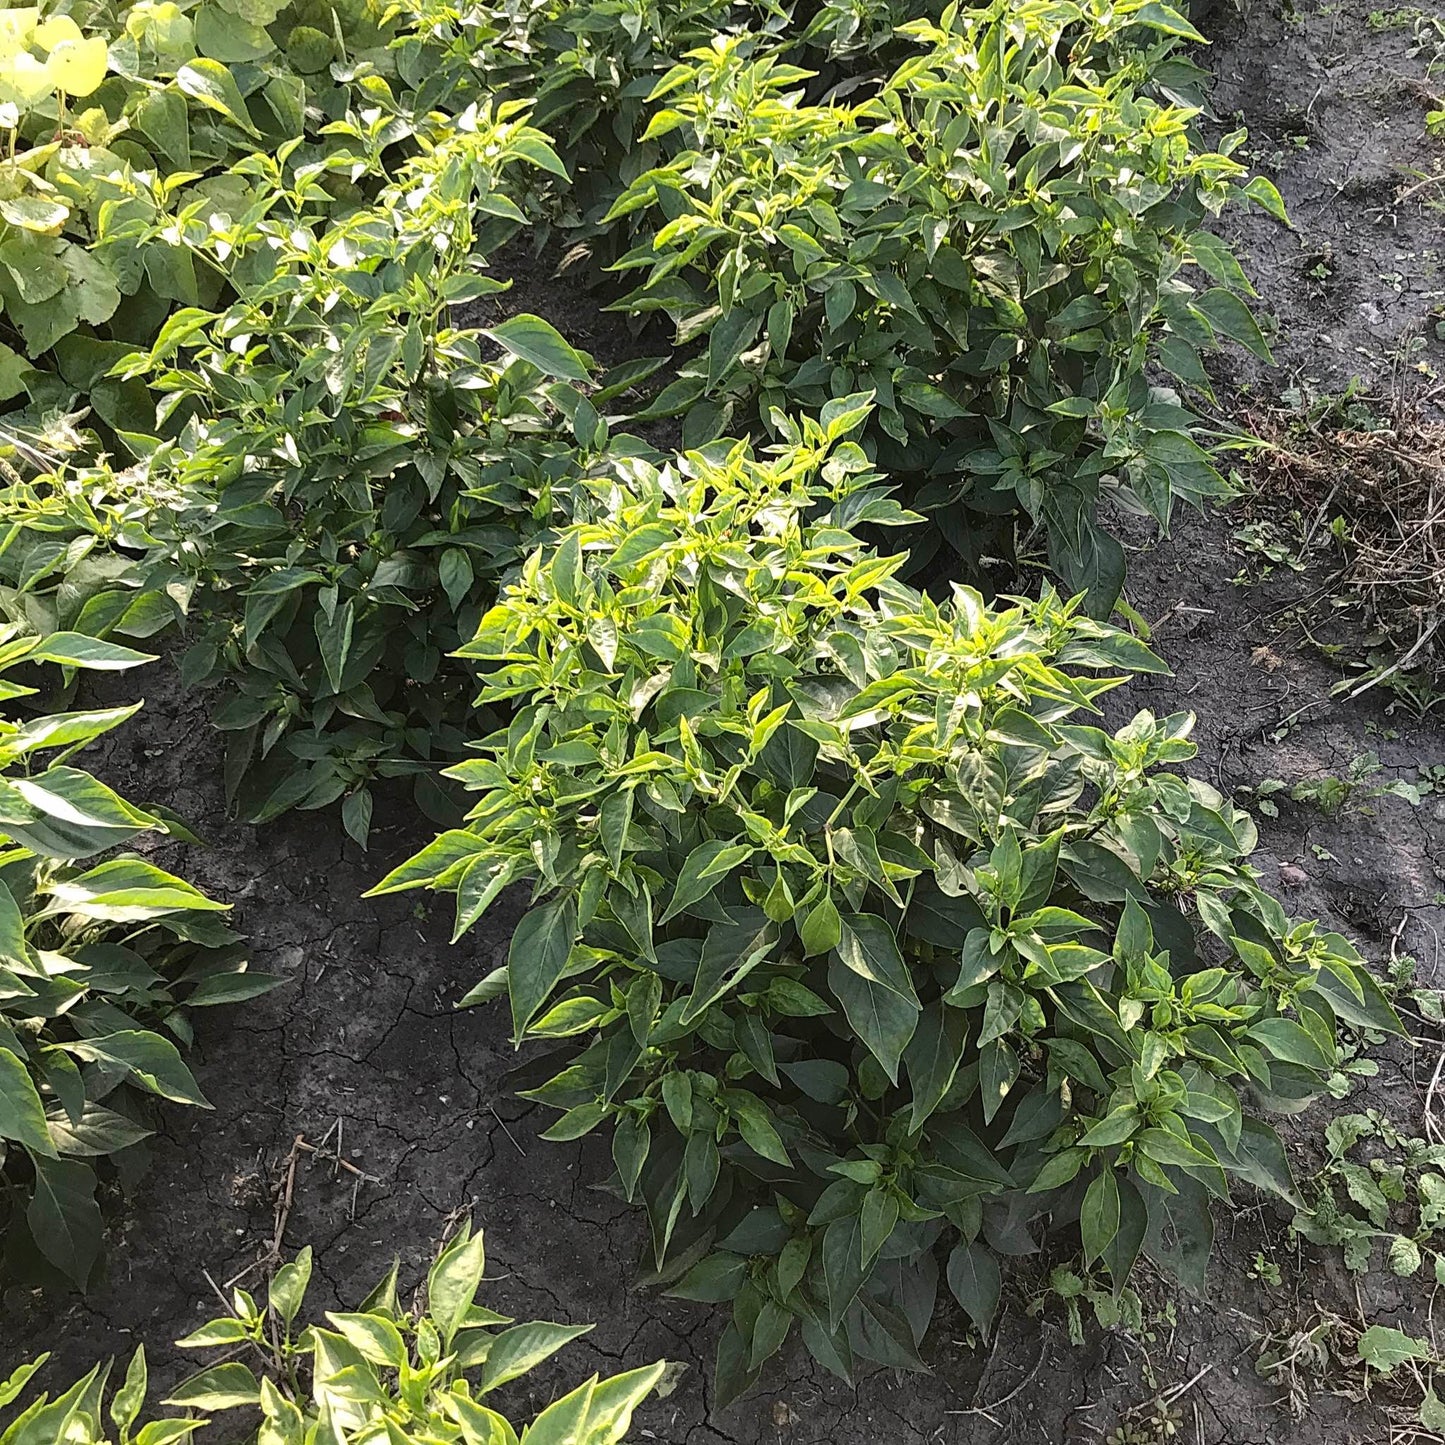 Bushy pepper plants.